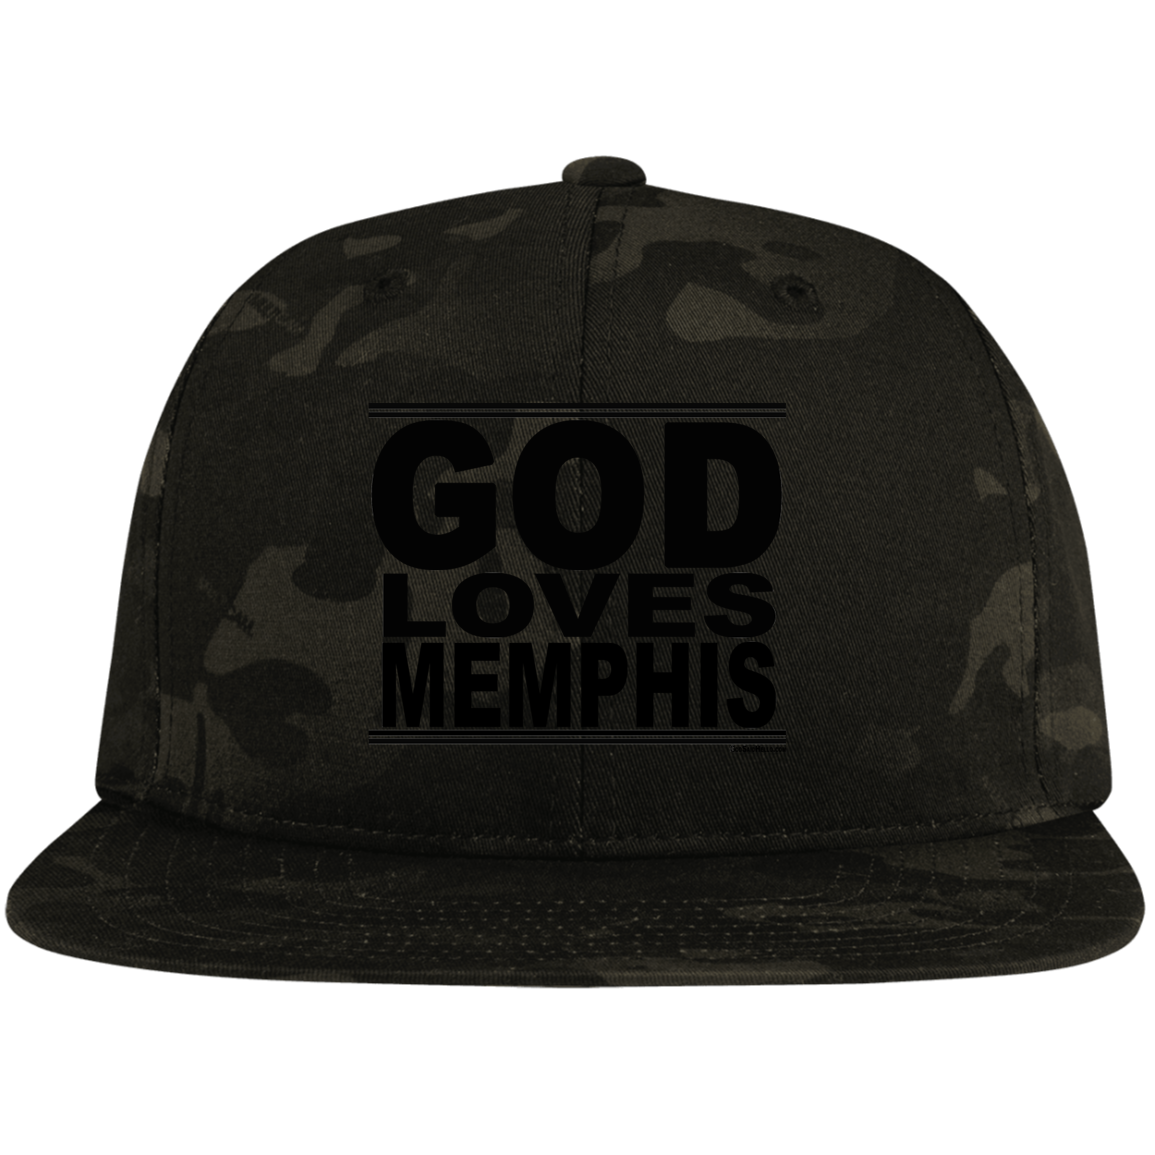 #GodLovesMemphis - Snapback Hat